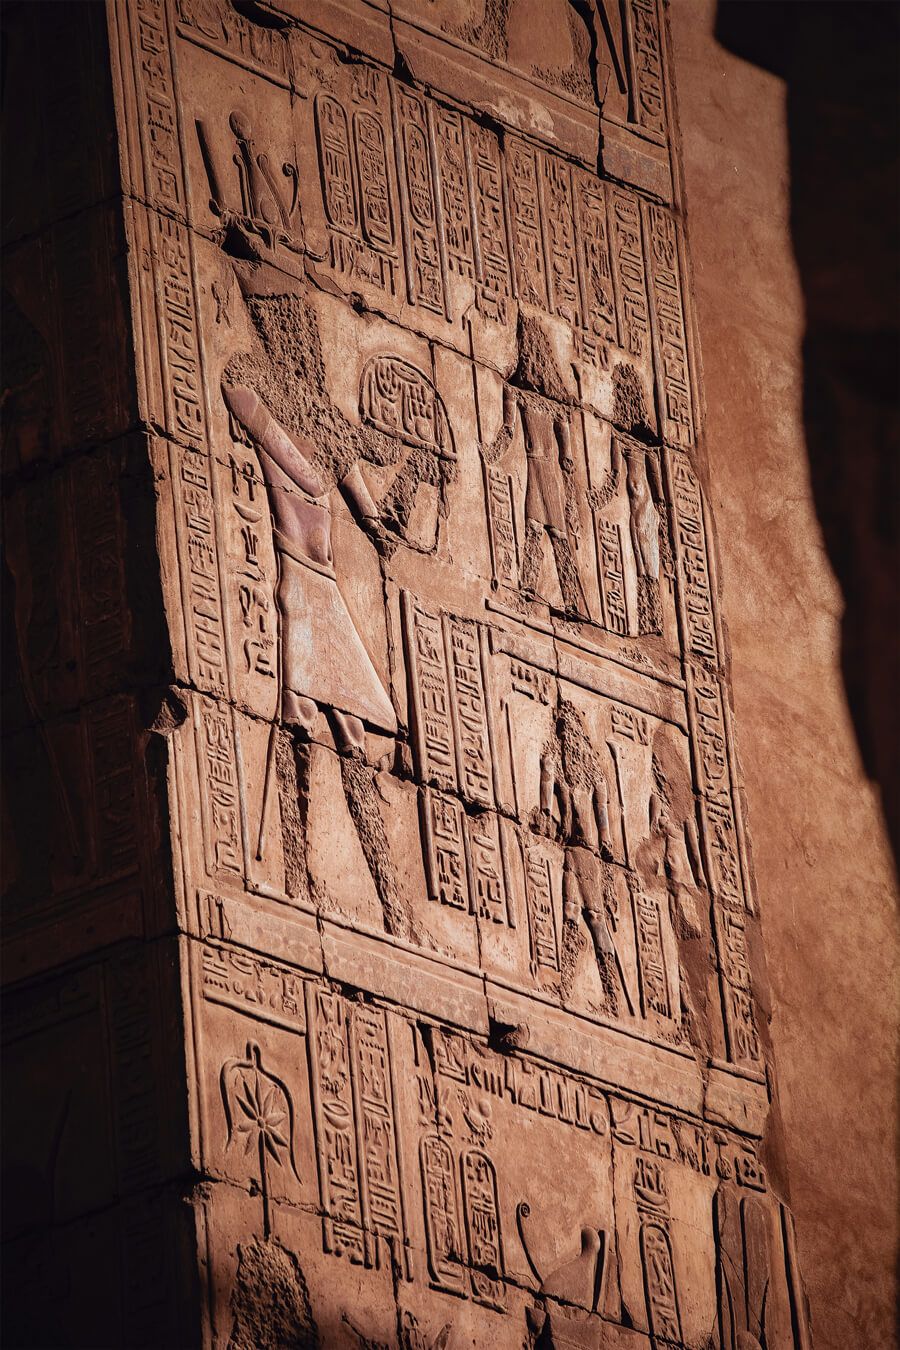 Egipto geroglificos